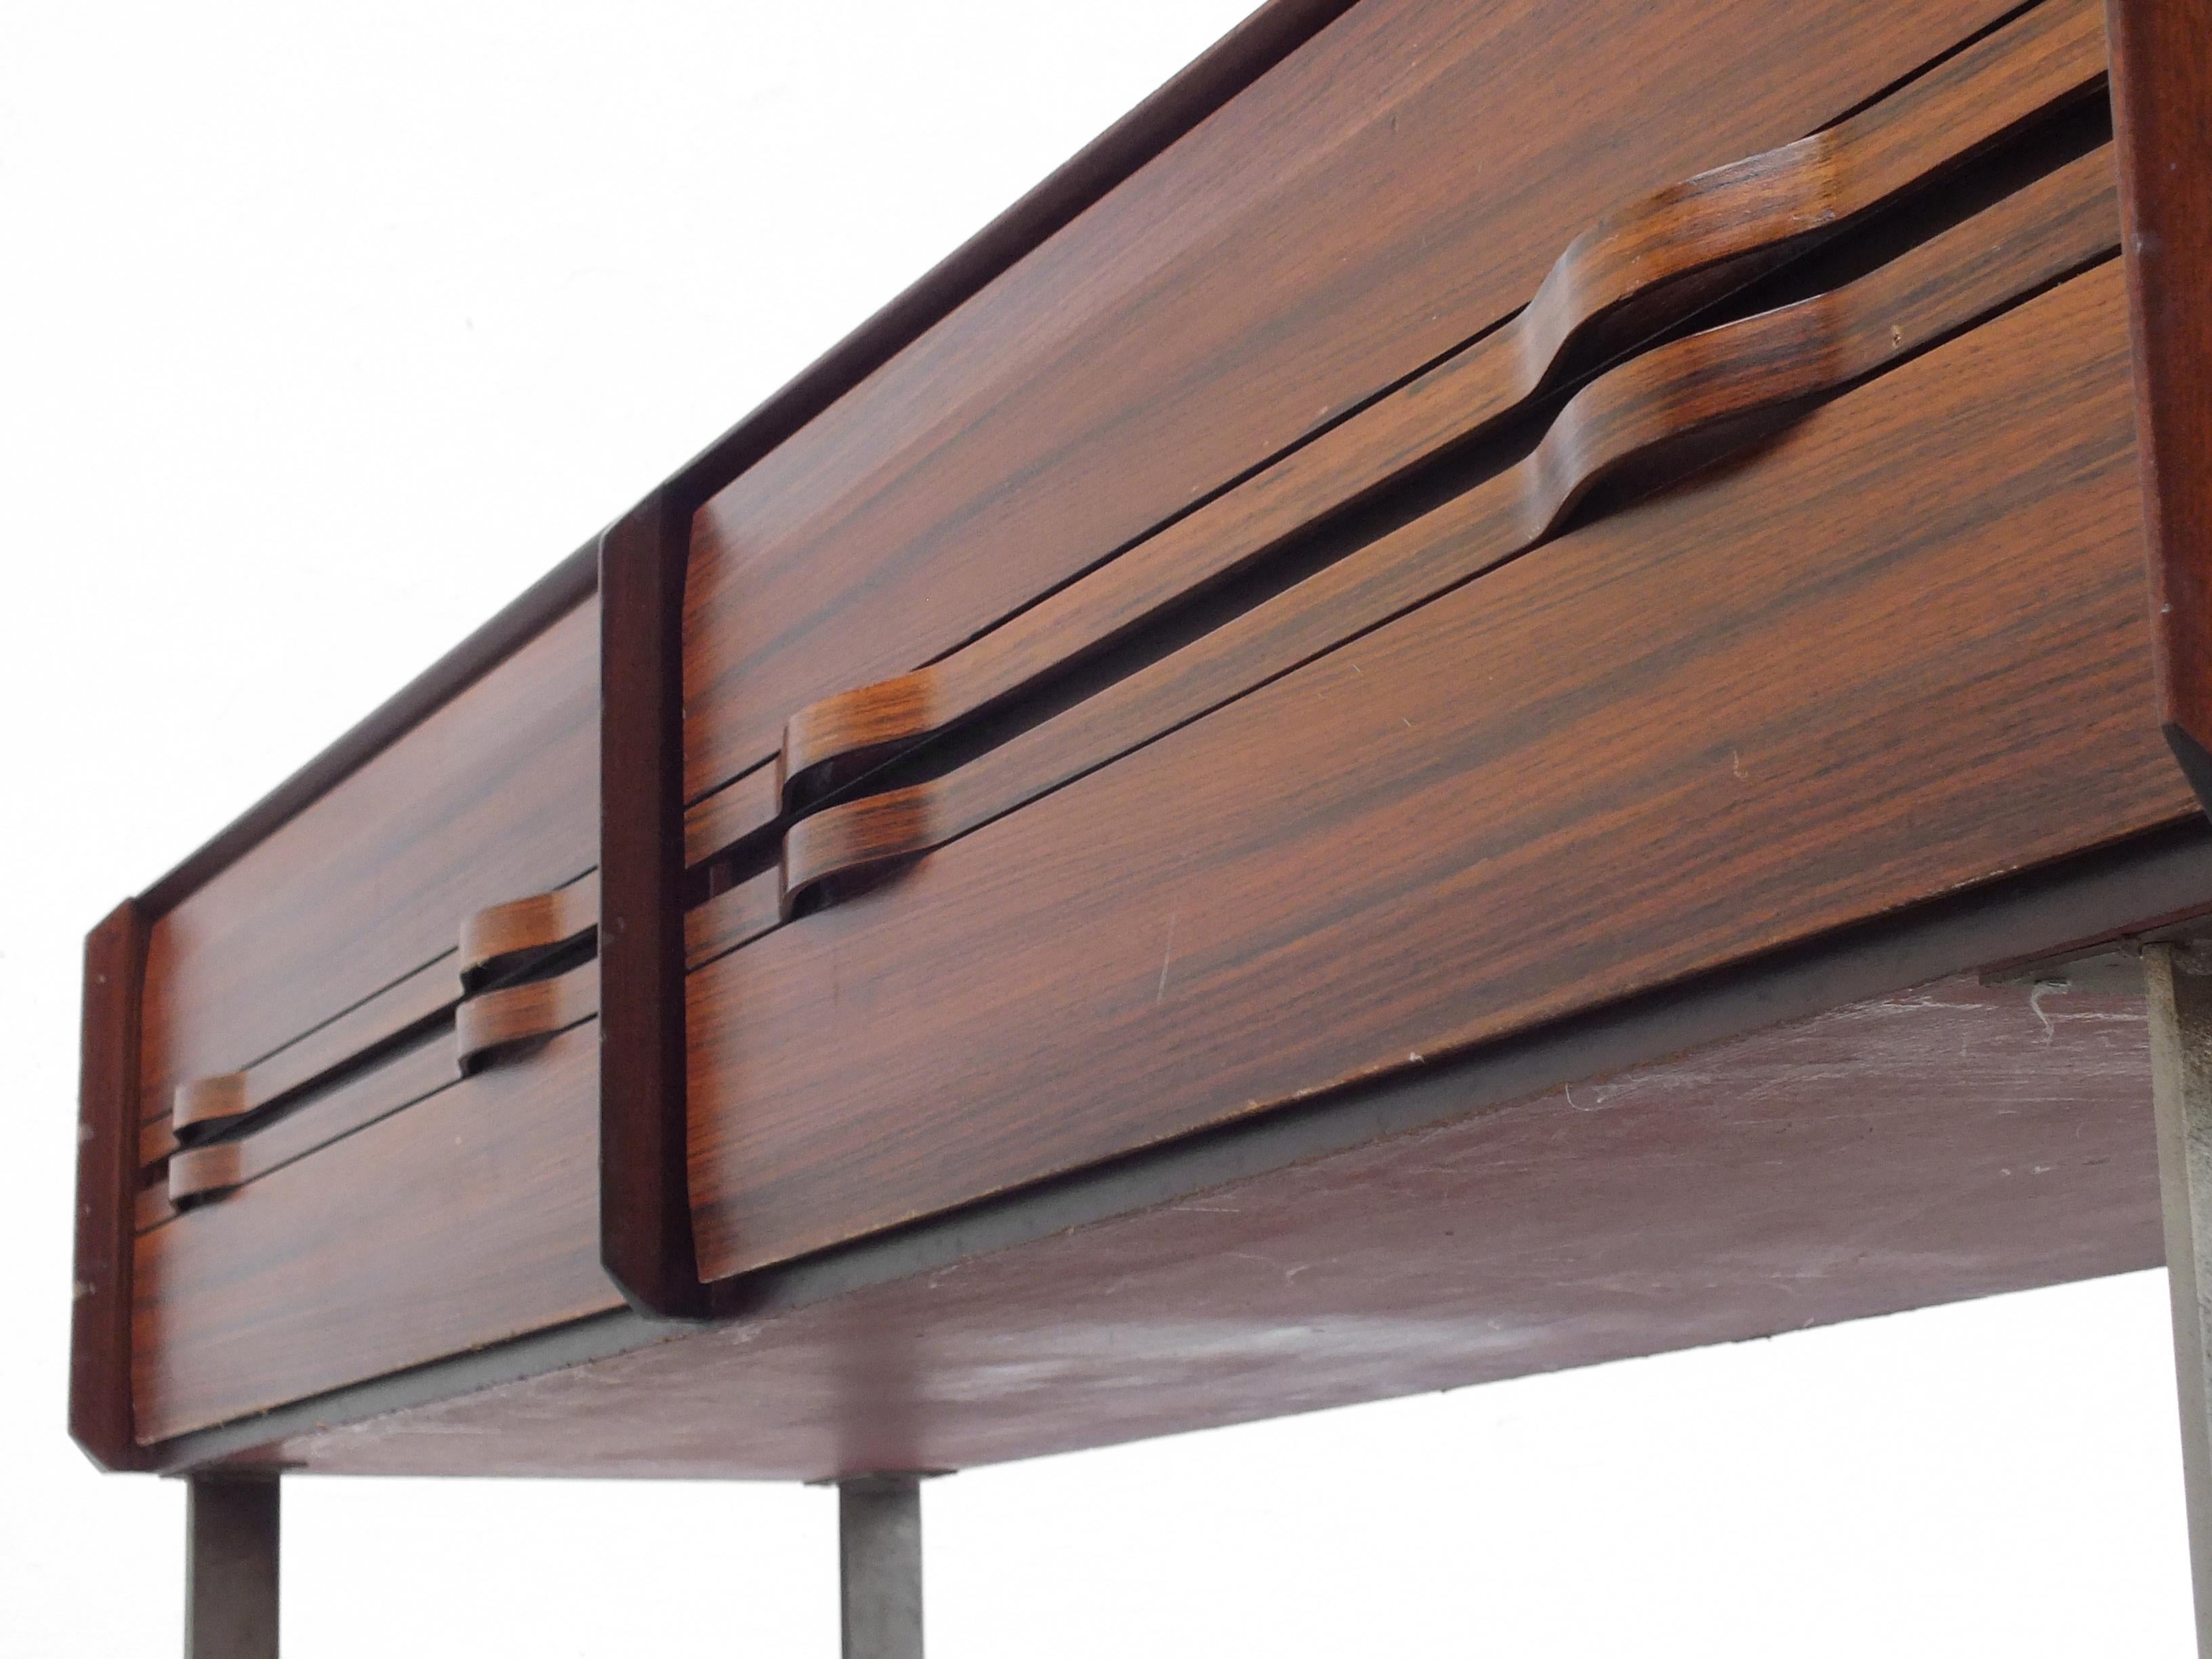 La Permanente meuble Cantu' Italy minimalist sideboard probable Frattini design  For Sale 3